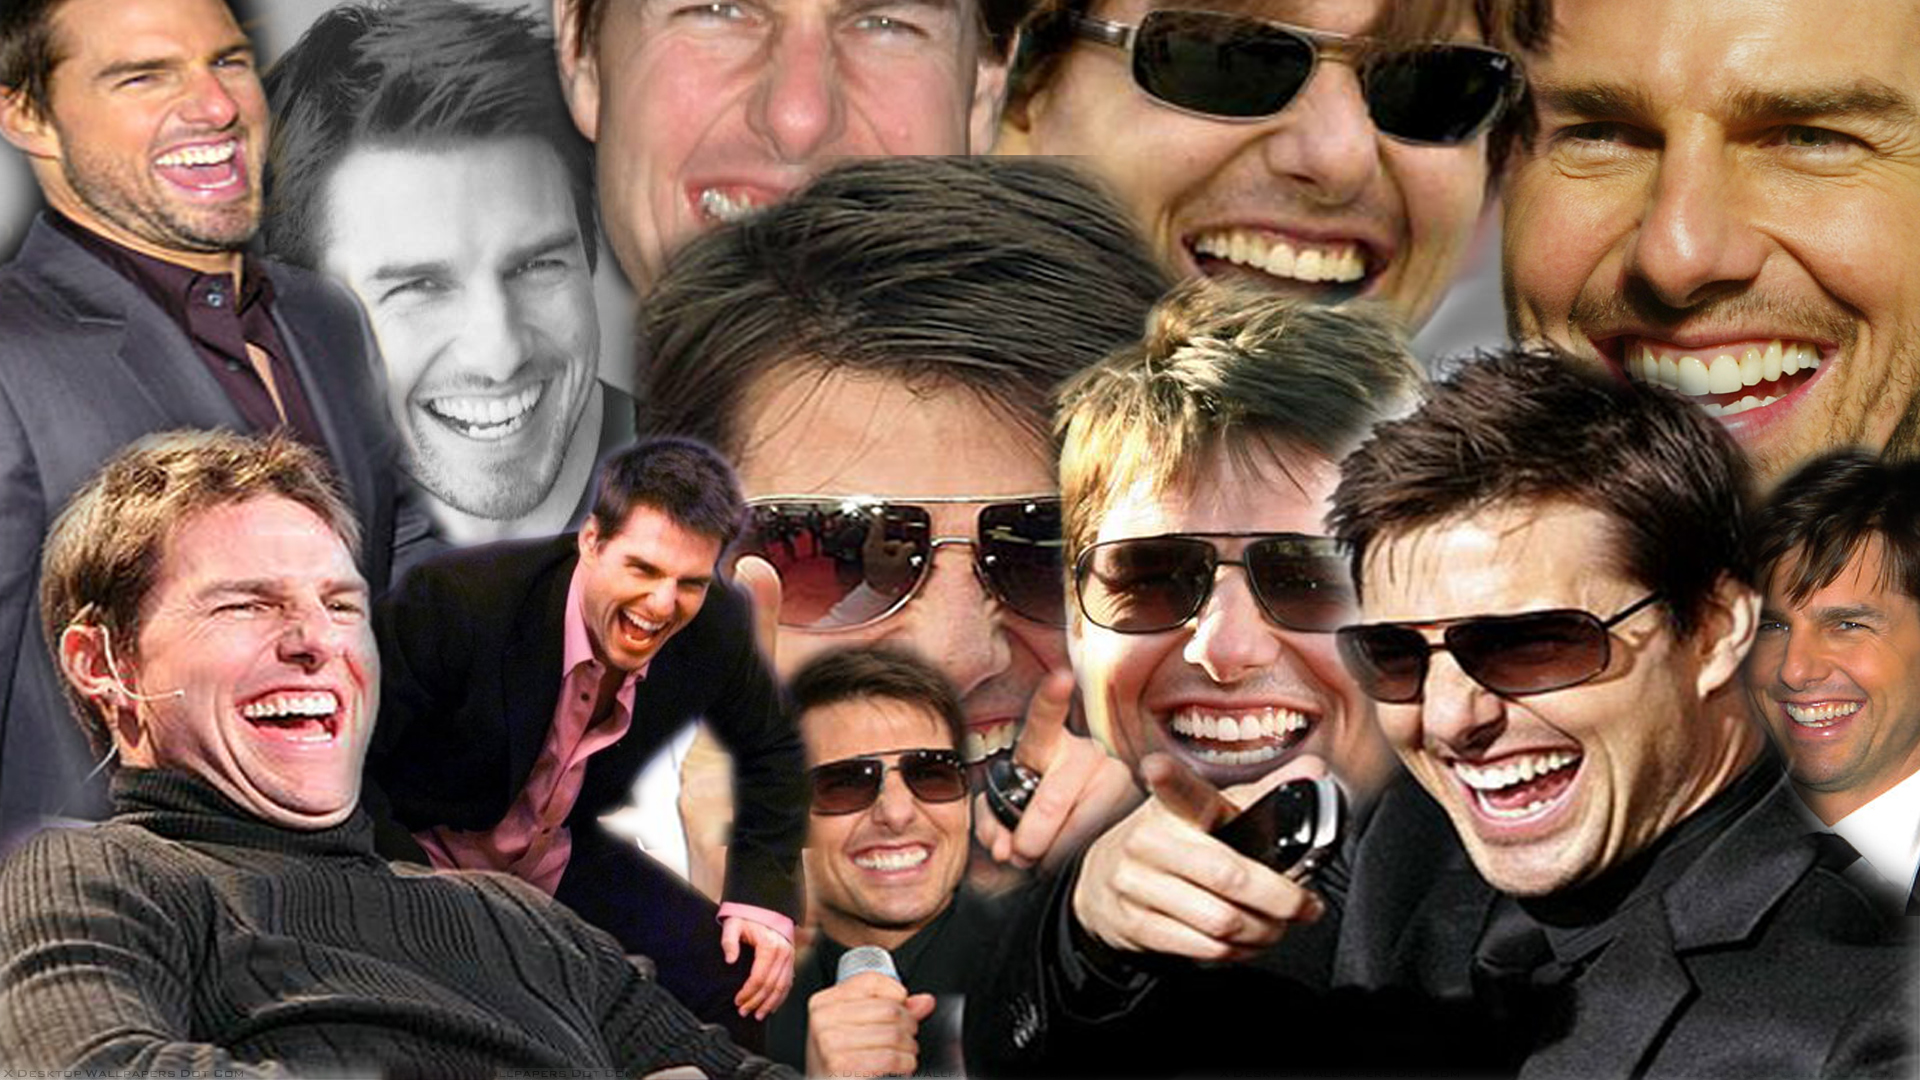 Tom Cruise Laughing HD Wallpaper 1920x1080 ID45629